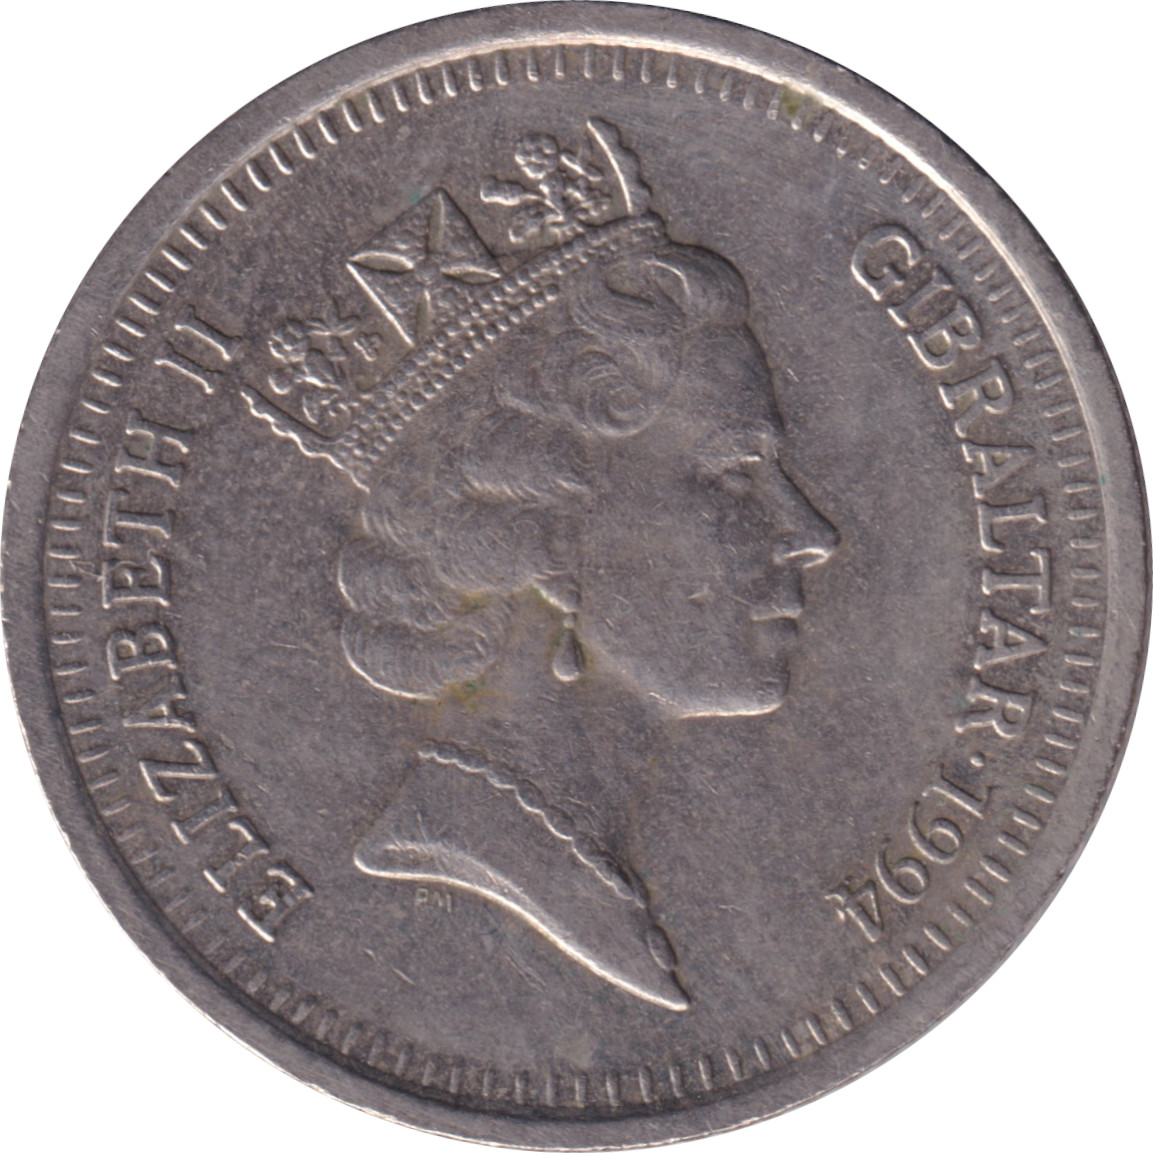 10 pence - Elizabeth II - Tête mature - Type tardif - Fort